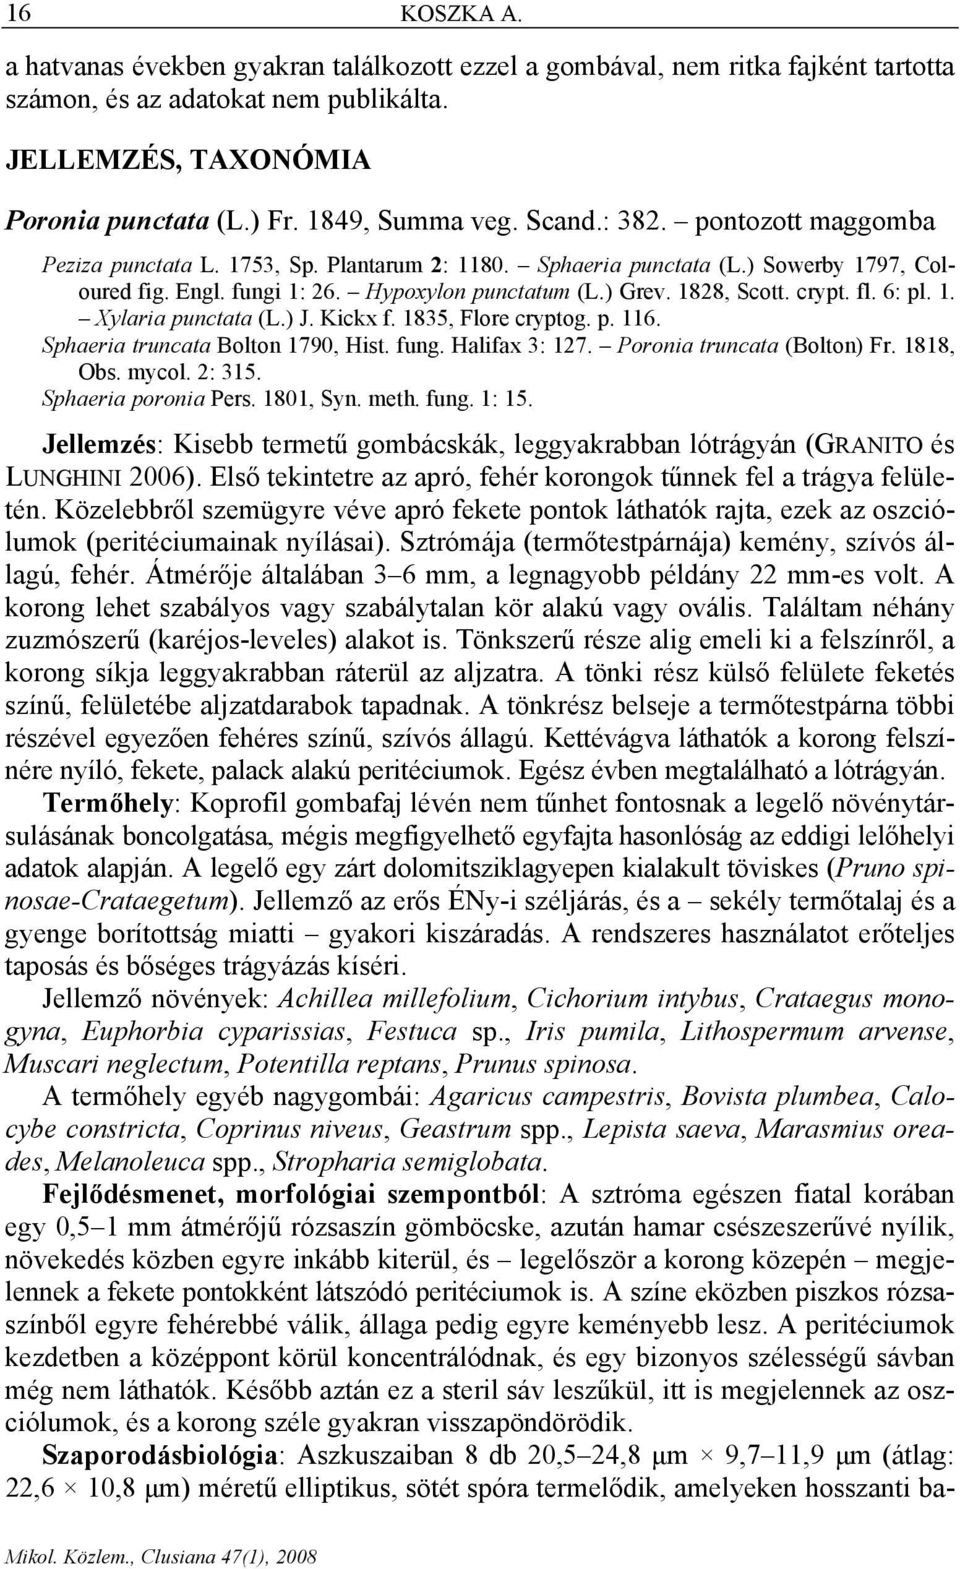 fl. 6: pl. 1. Xylaria punctata (L.) J. Kickx f. 1835, Flore cryptog. p. 116. Sphaeria truncata Bolton 1790, Hist. fung. Halifax 3: 127. Poronia truncata (Bolton) Fr. 1818, Obs. mycol. 2: 315.